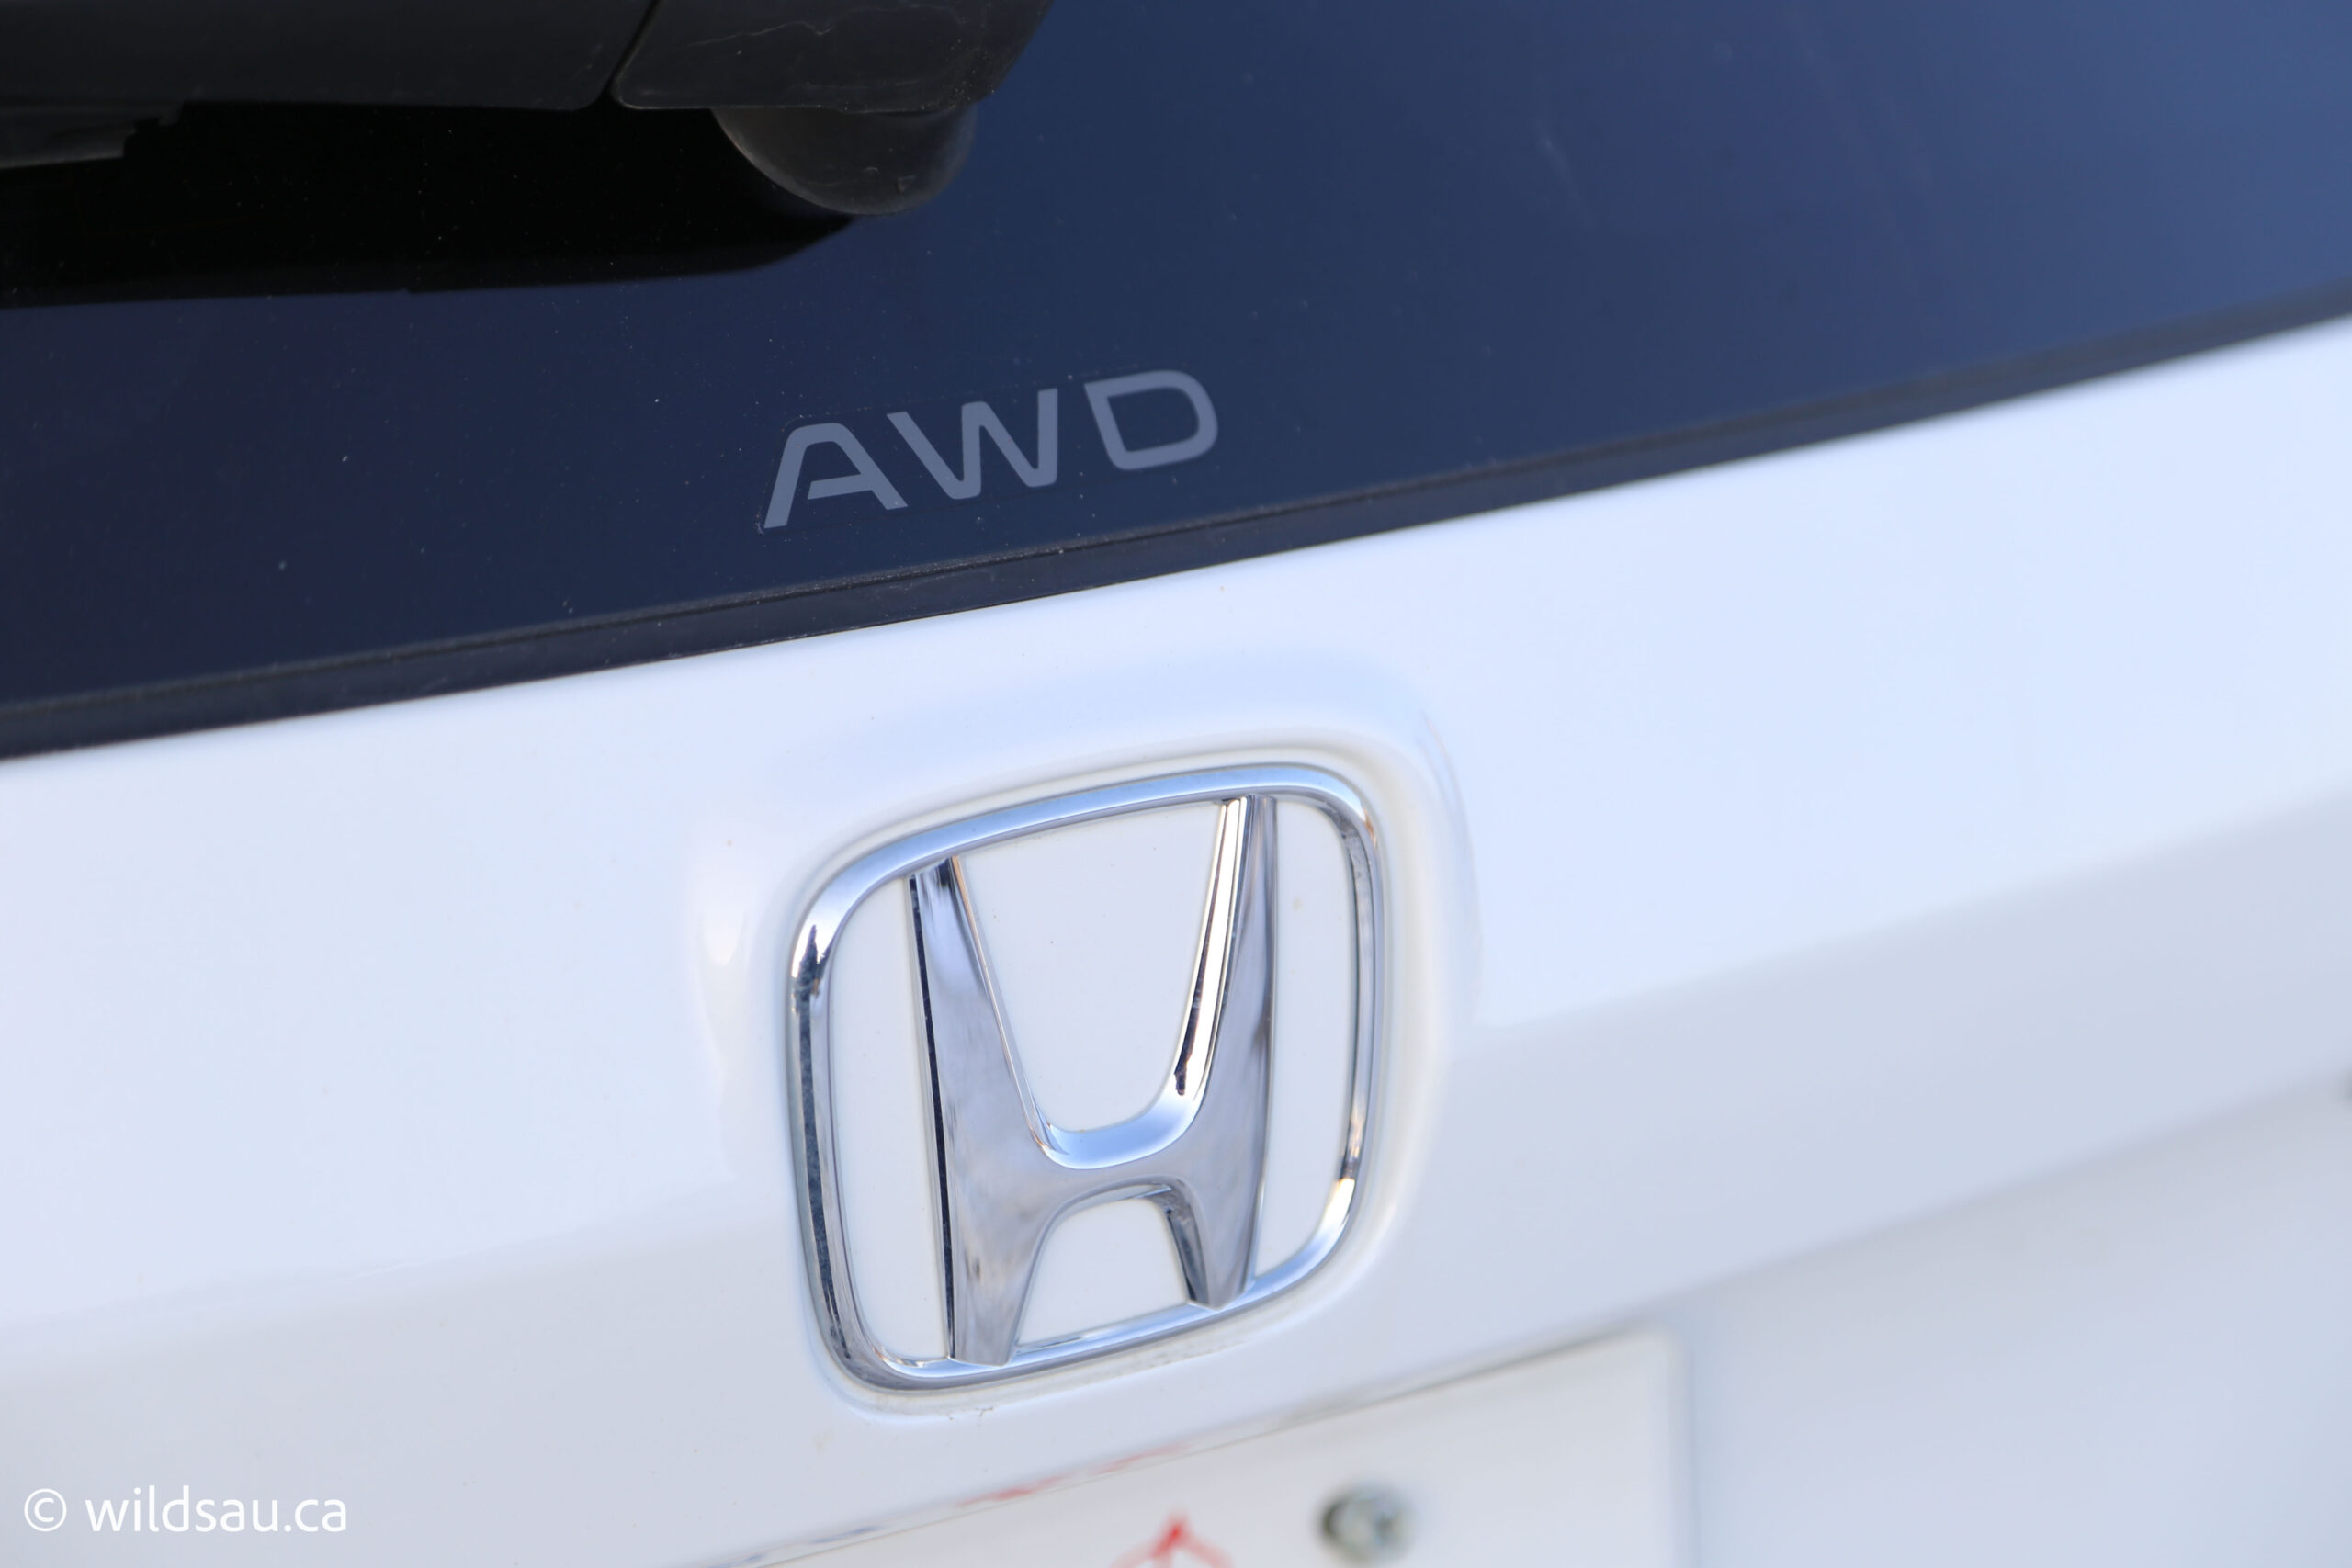 AWD Honda badging